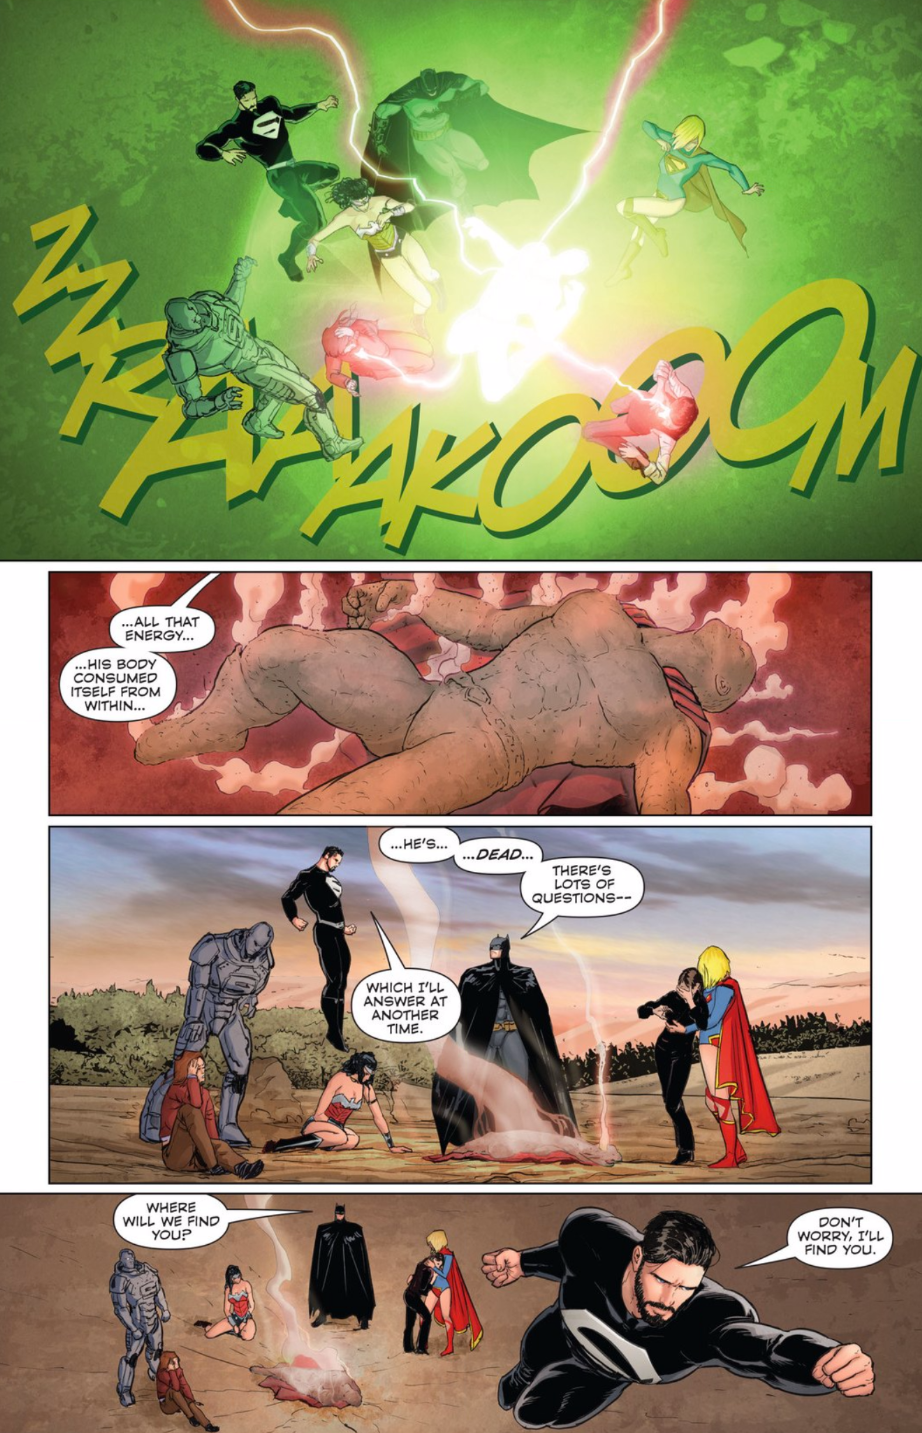 40 - [DC Comics] Superman: Discusión General - Página 10 Pmxp5wkhym7m6rtysmbn